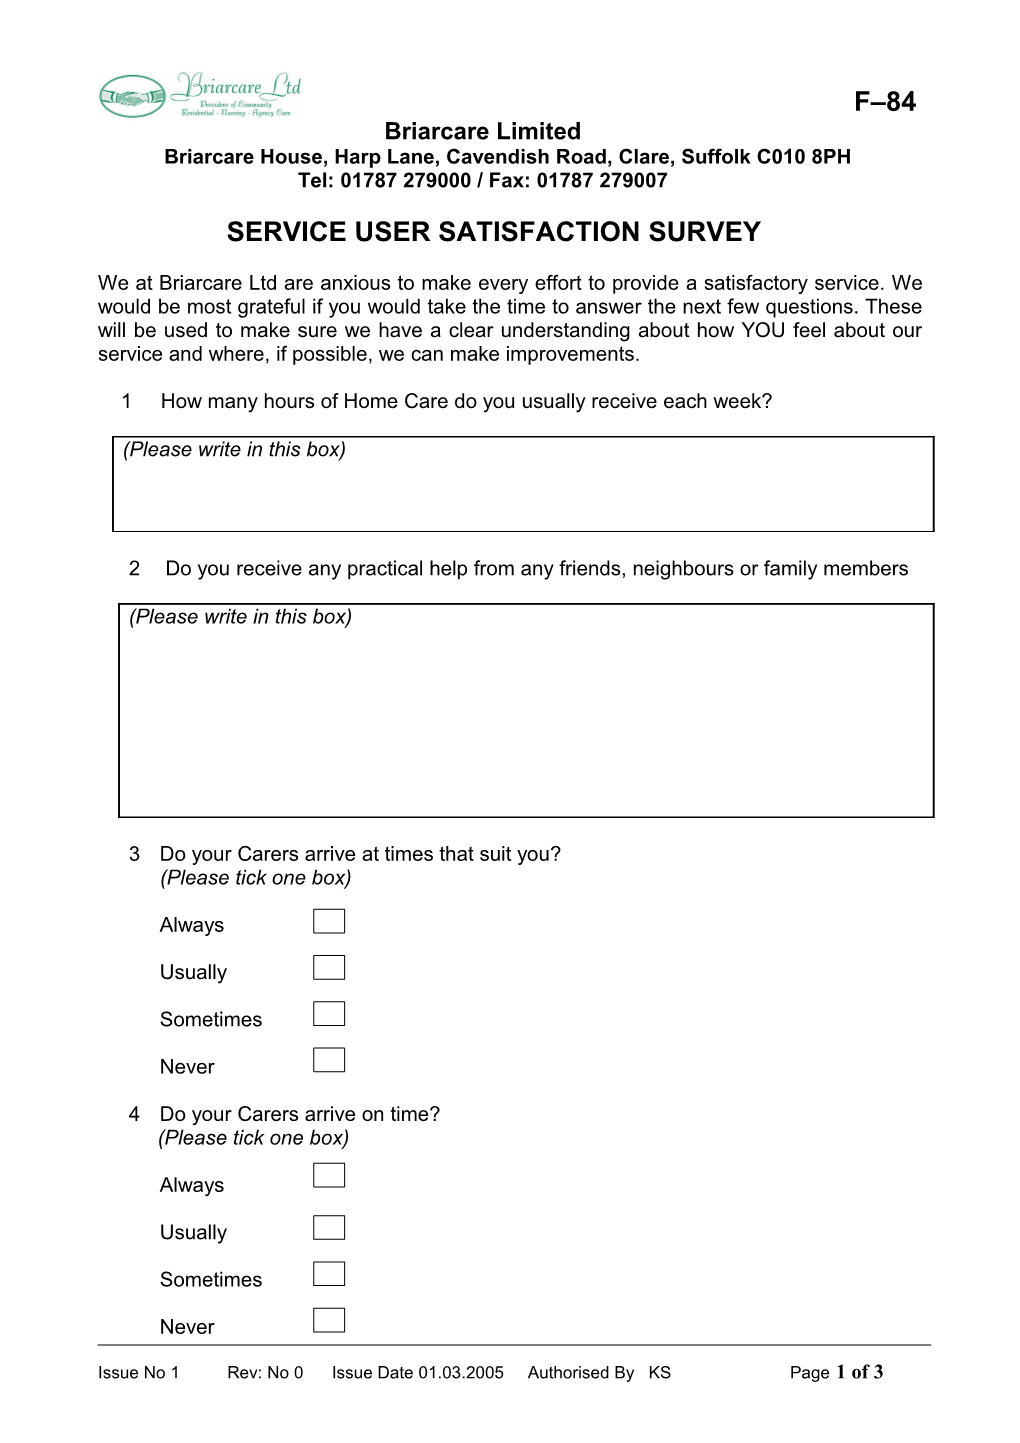 Service User Satisfactiion Survey